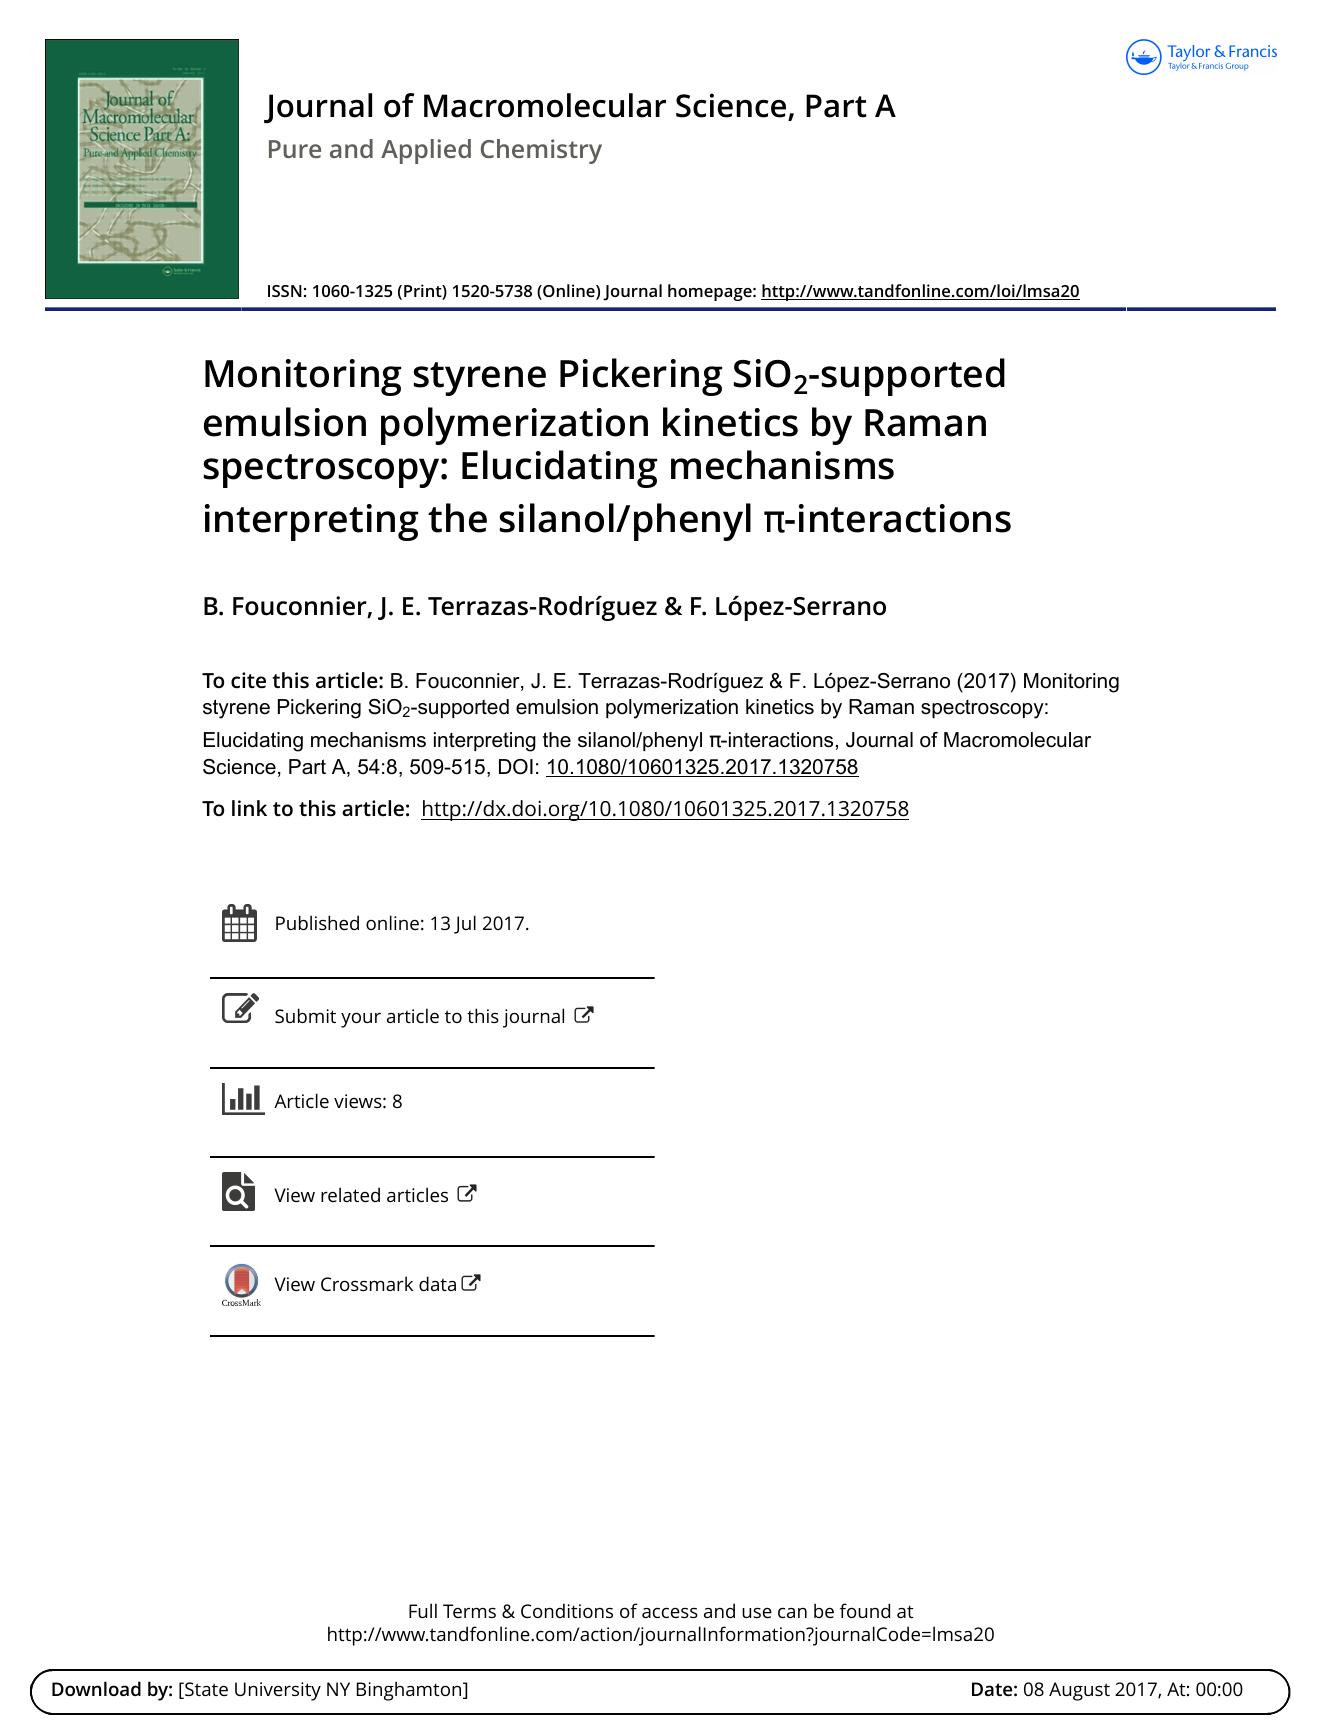 Monitoring styrene Pickering SiO2-supported emulsion polymerization kinetics by Raman spectroscopy: Elucidating mechanisms interpreting the silanolphenyl Ï-interactions by B. Fouconnier & J. E. Terrazas-Rodríguez & F. López-Serrano